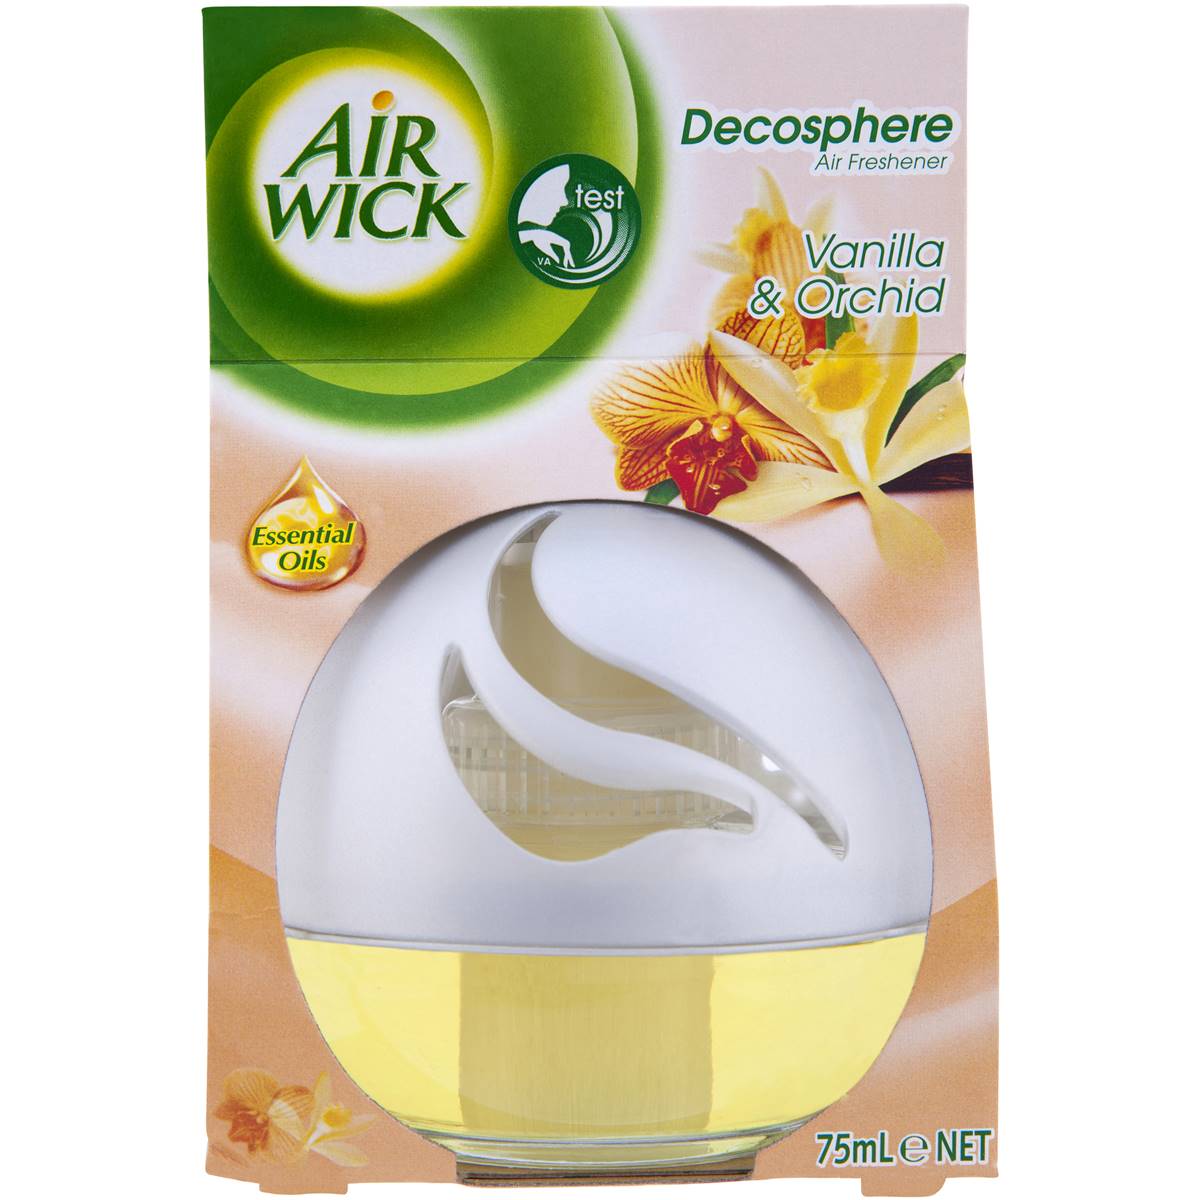 Airwick Decosphere Air Freshener Vanilla & Orchid 75ml